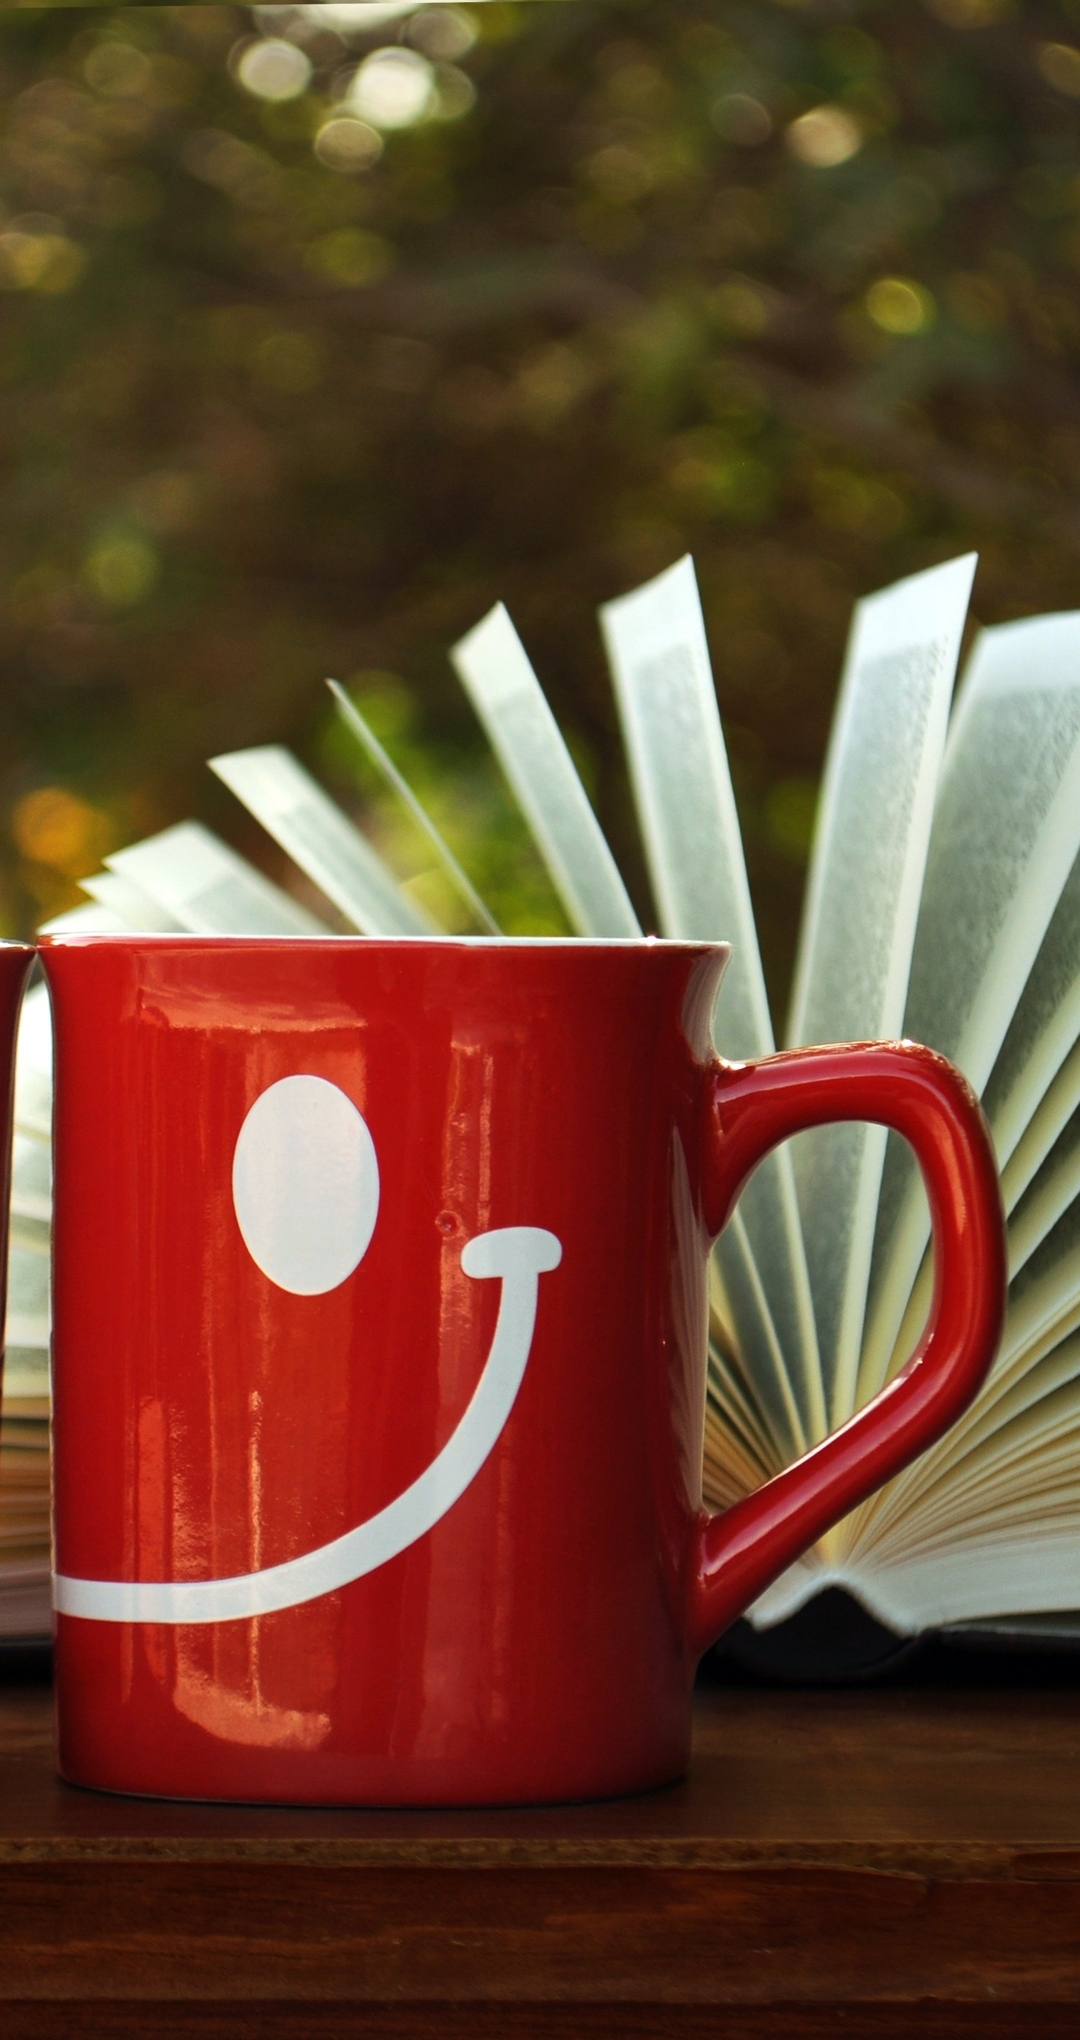 Image: Mugs, smile, mood, red, book, leaves